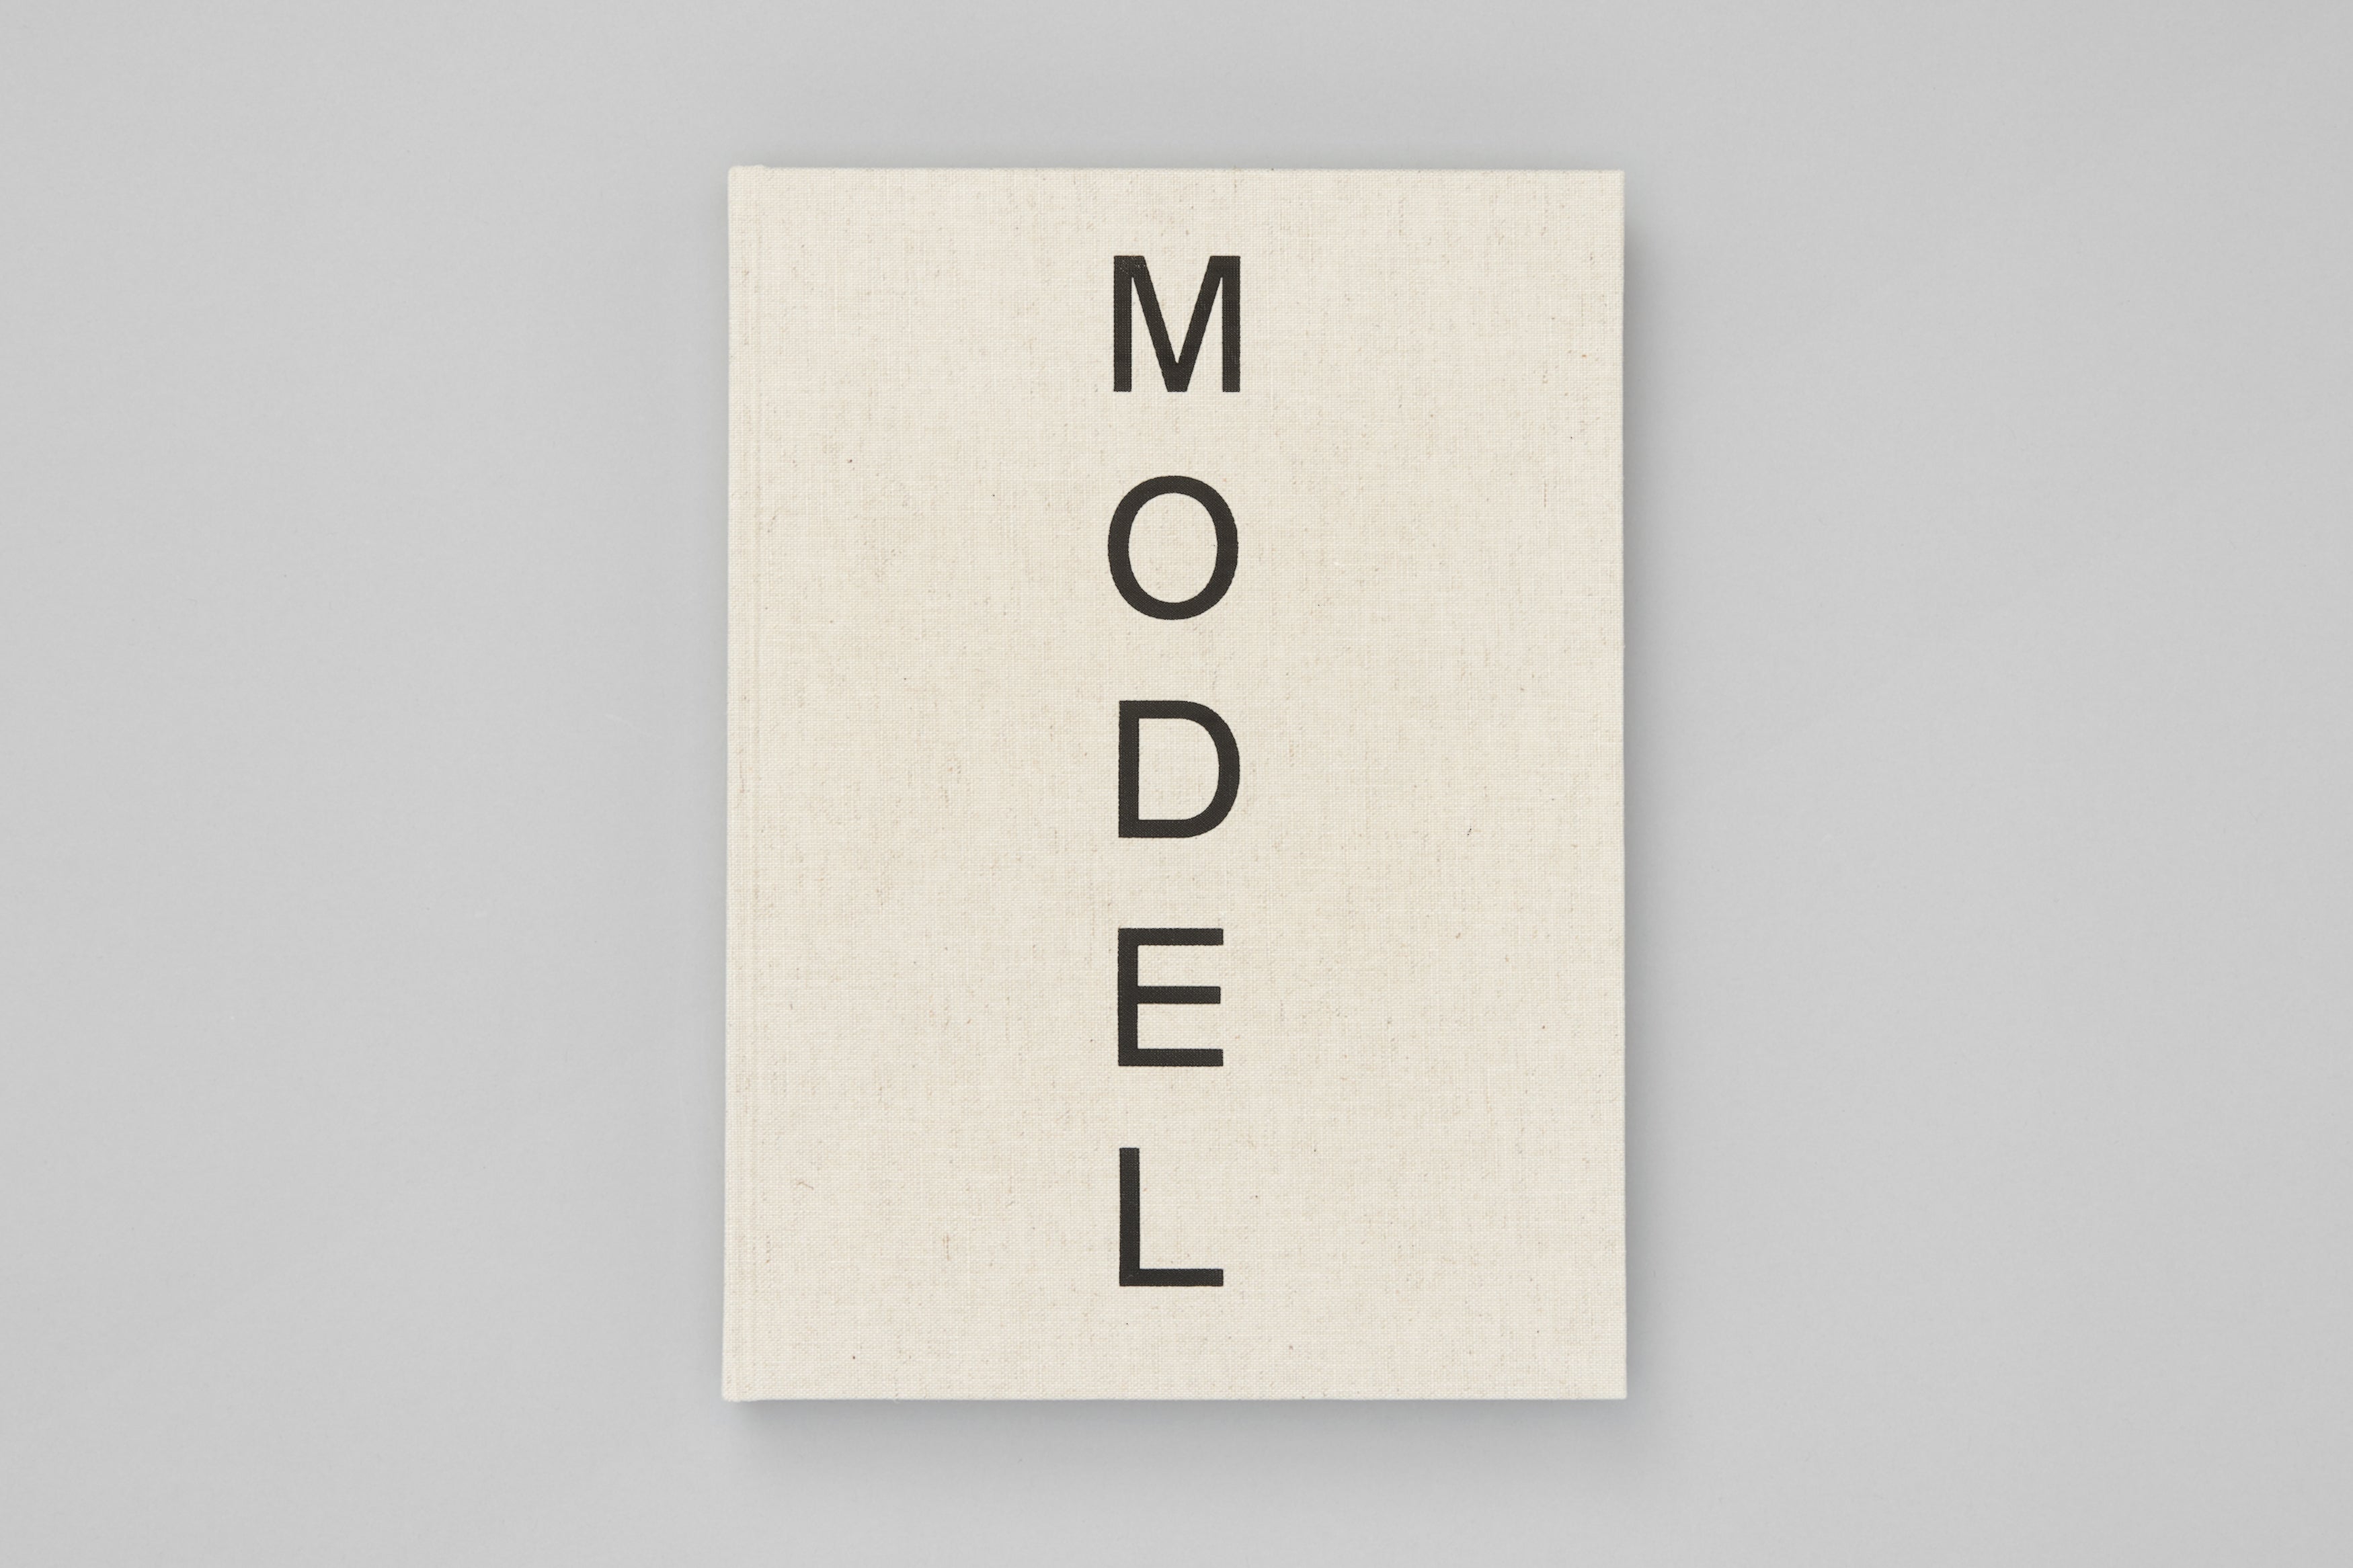 Antony Gormley 'Model' (2013)